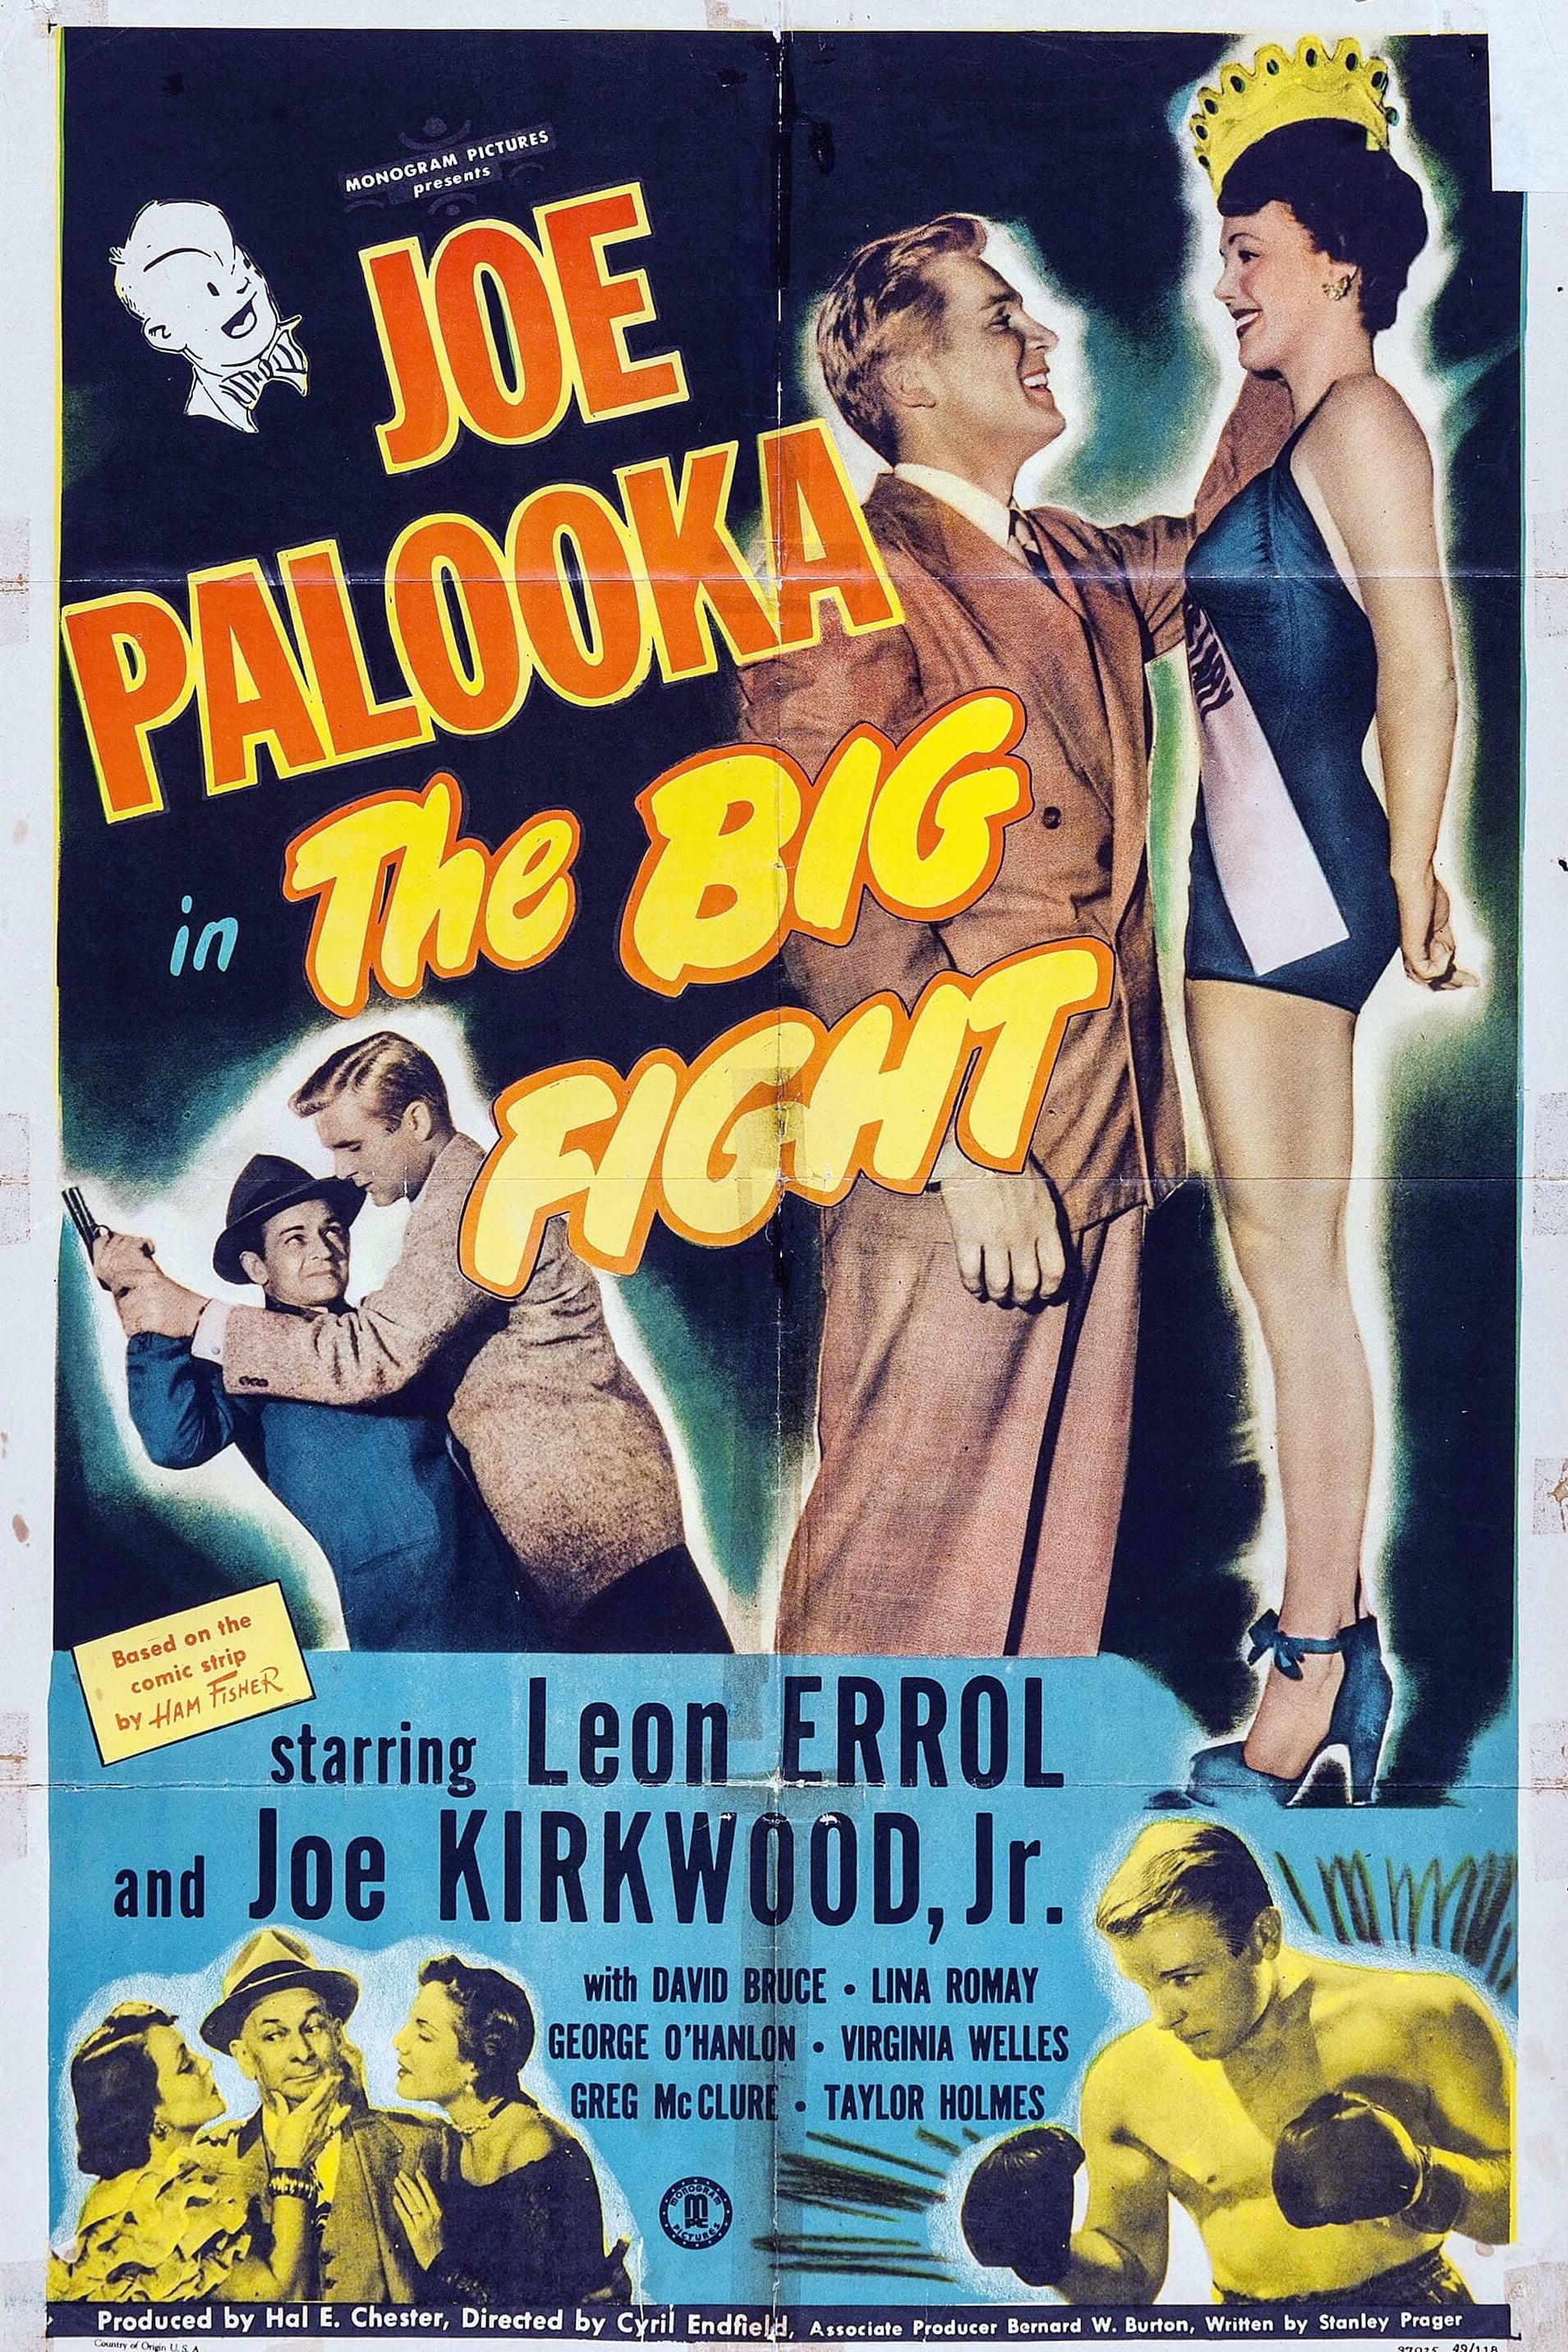 Joe Palooka in the Big Fight (1949)